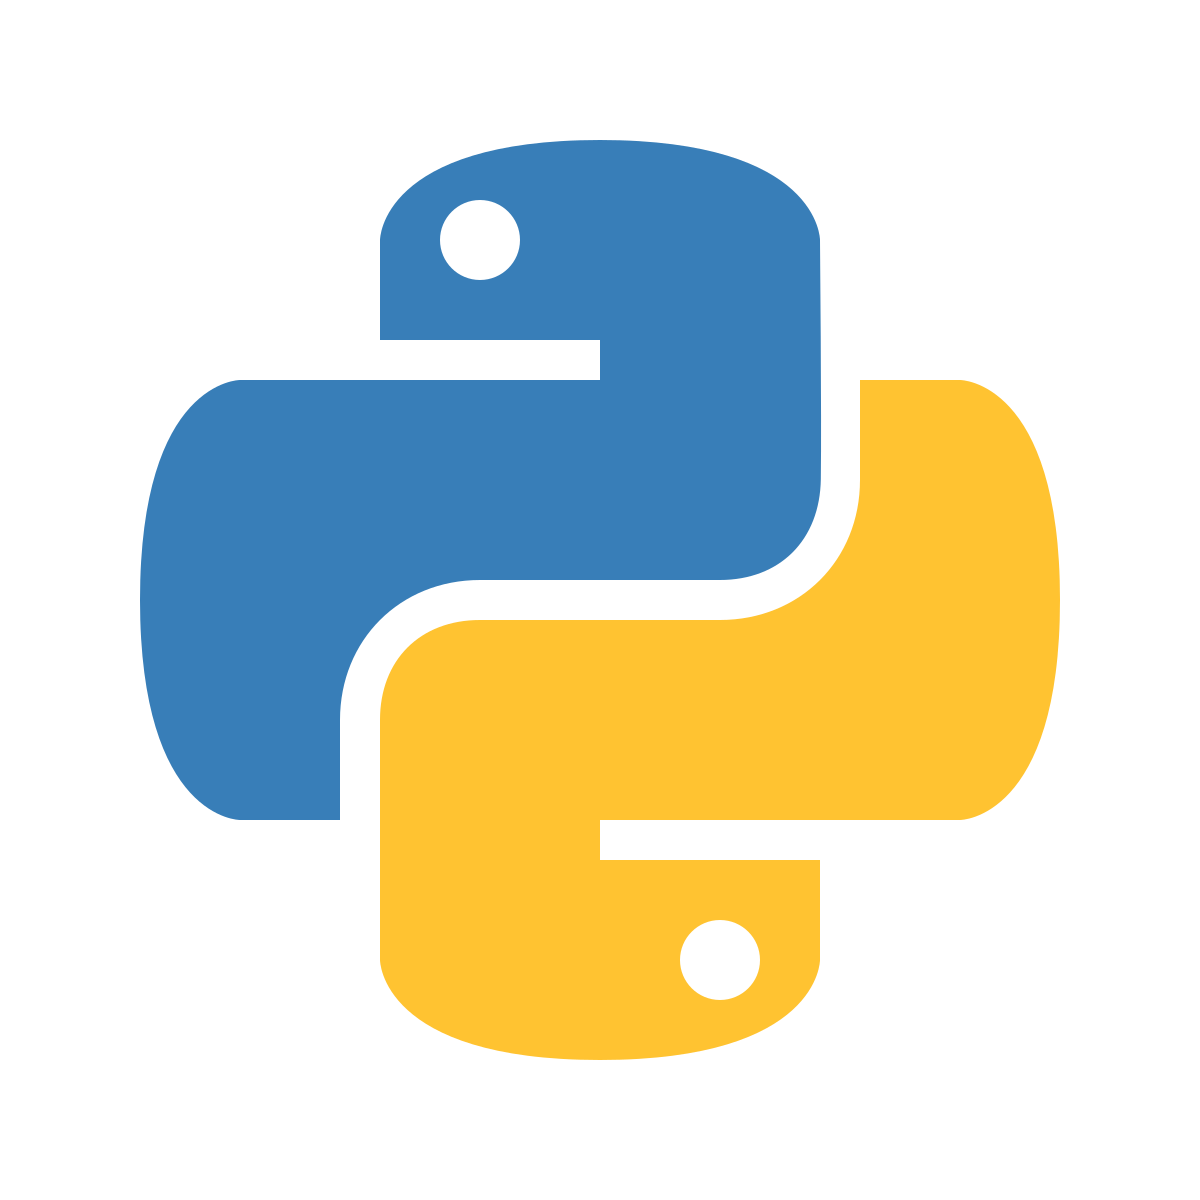 [Python] os, shutil - 폴더 생성 및 삭제하기